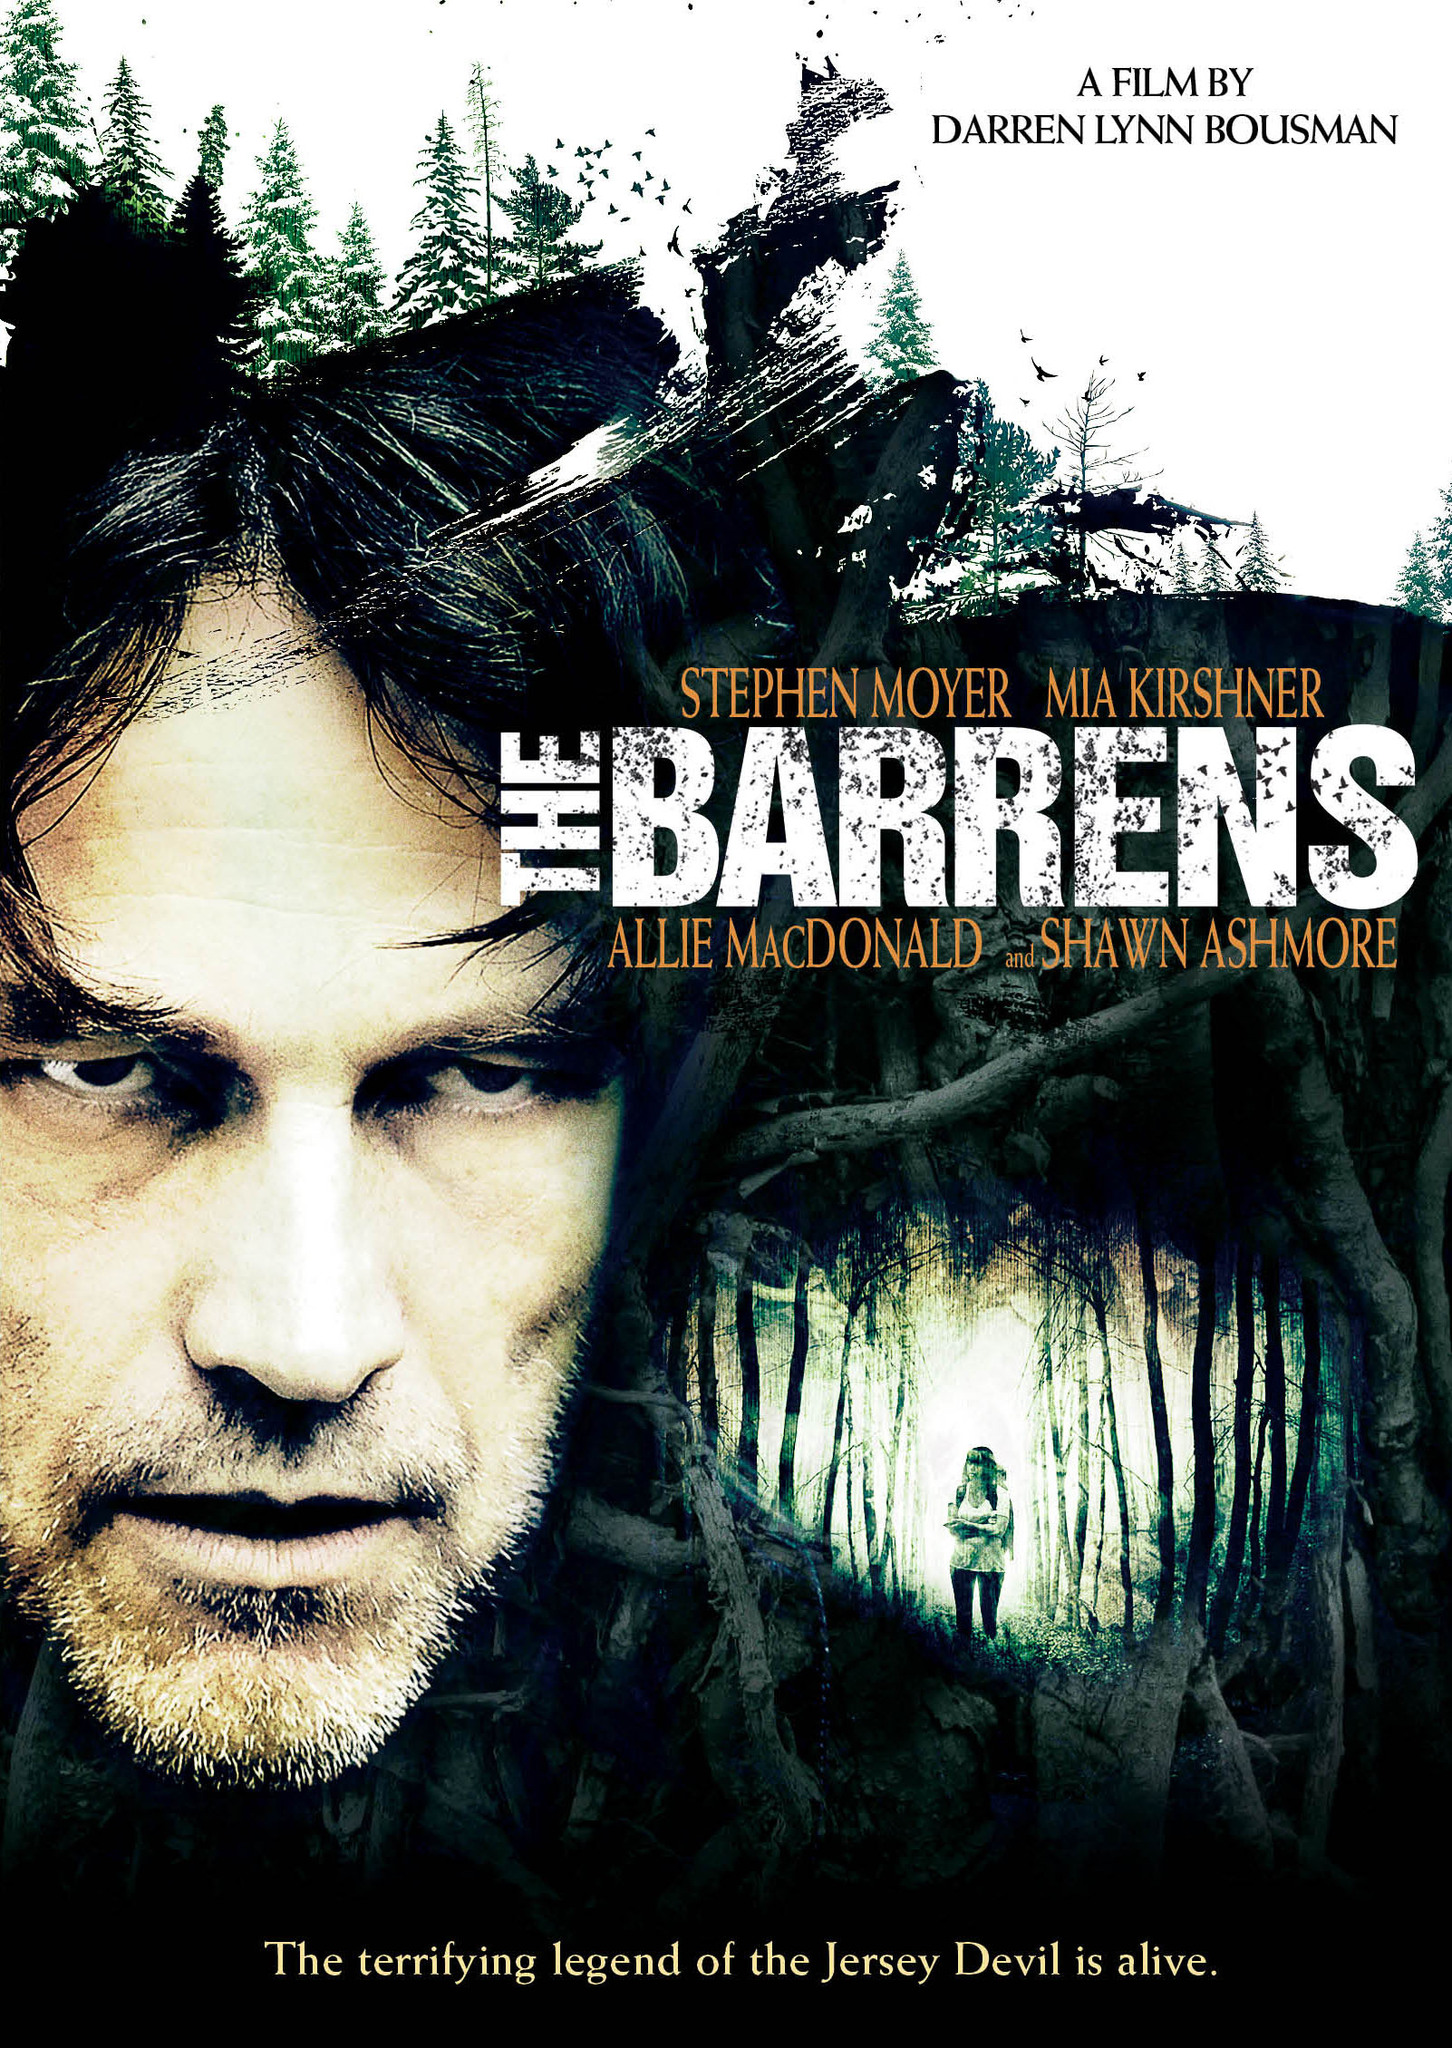 A Barrens - The Barrens